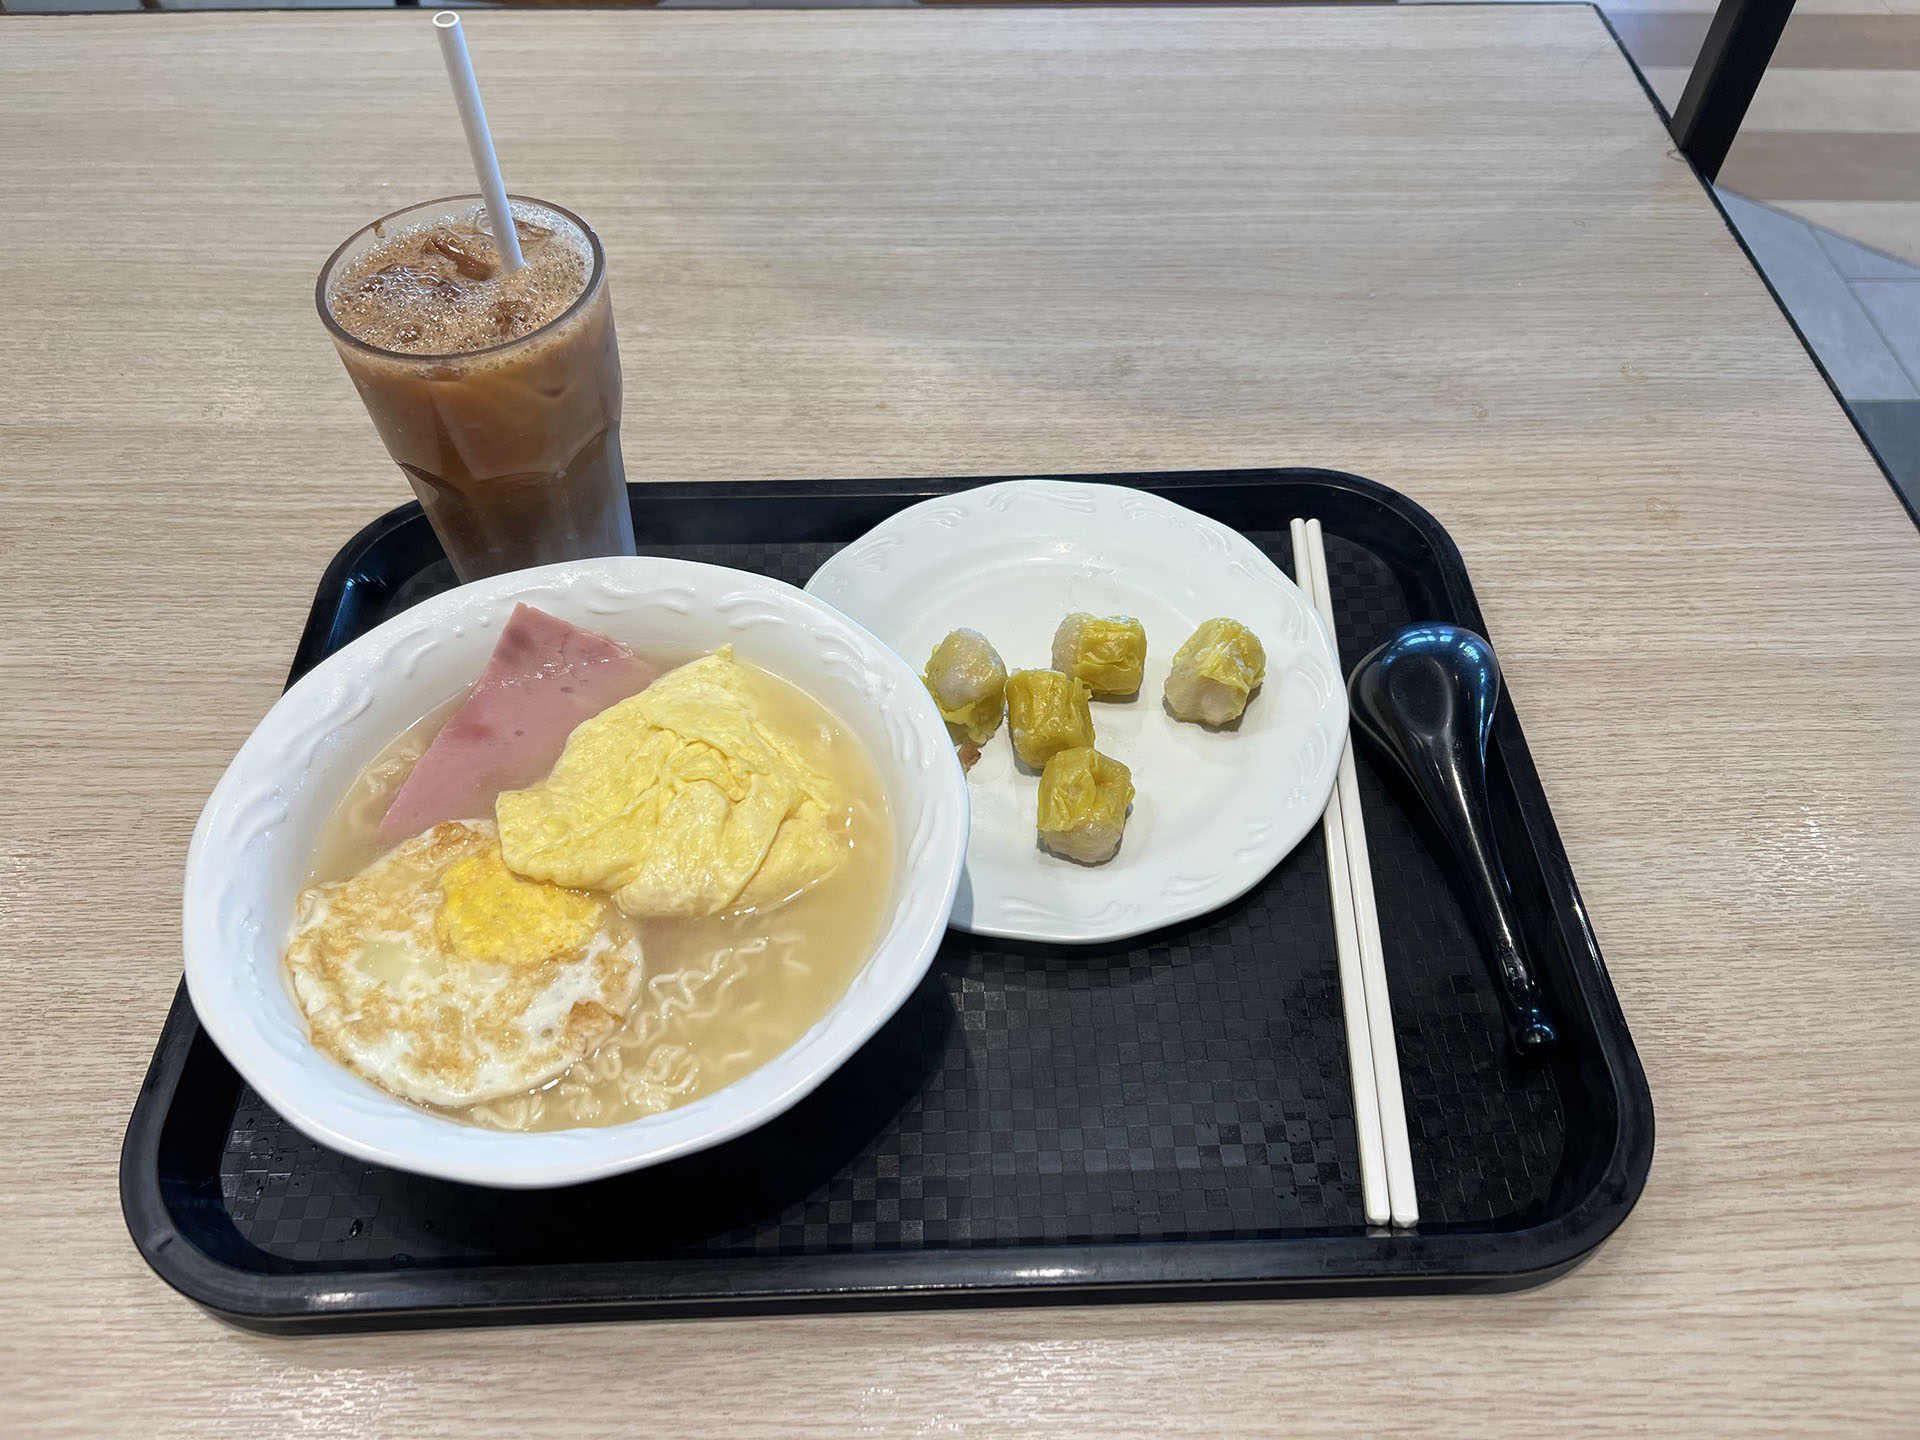 HKUST Breakfast at LG1